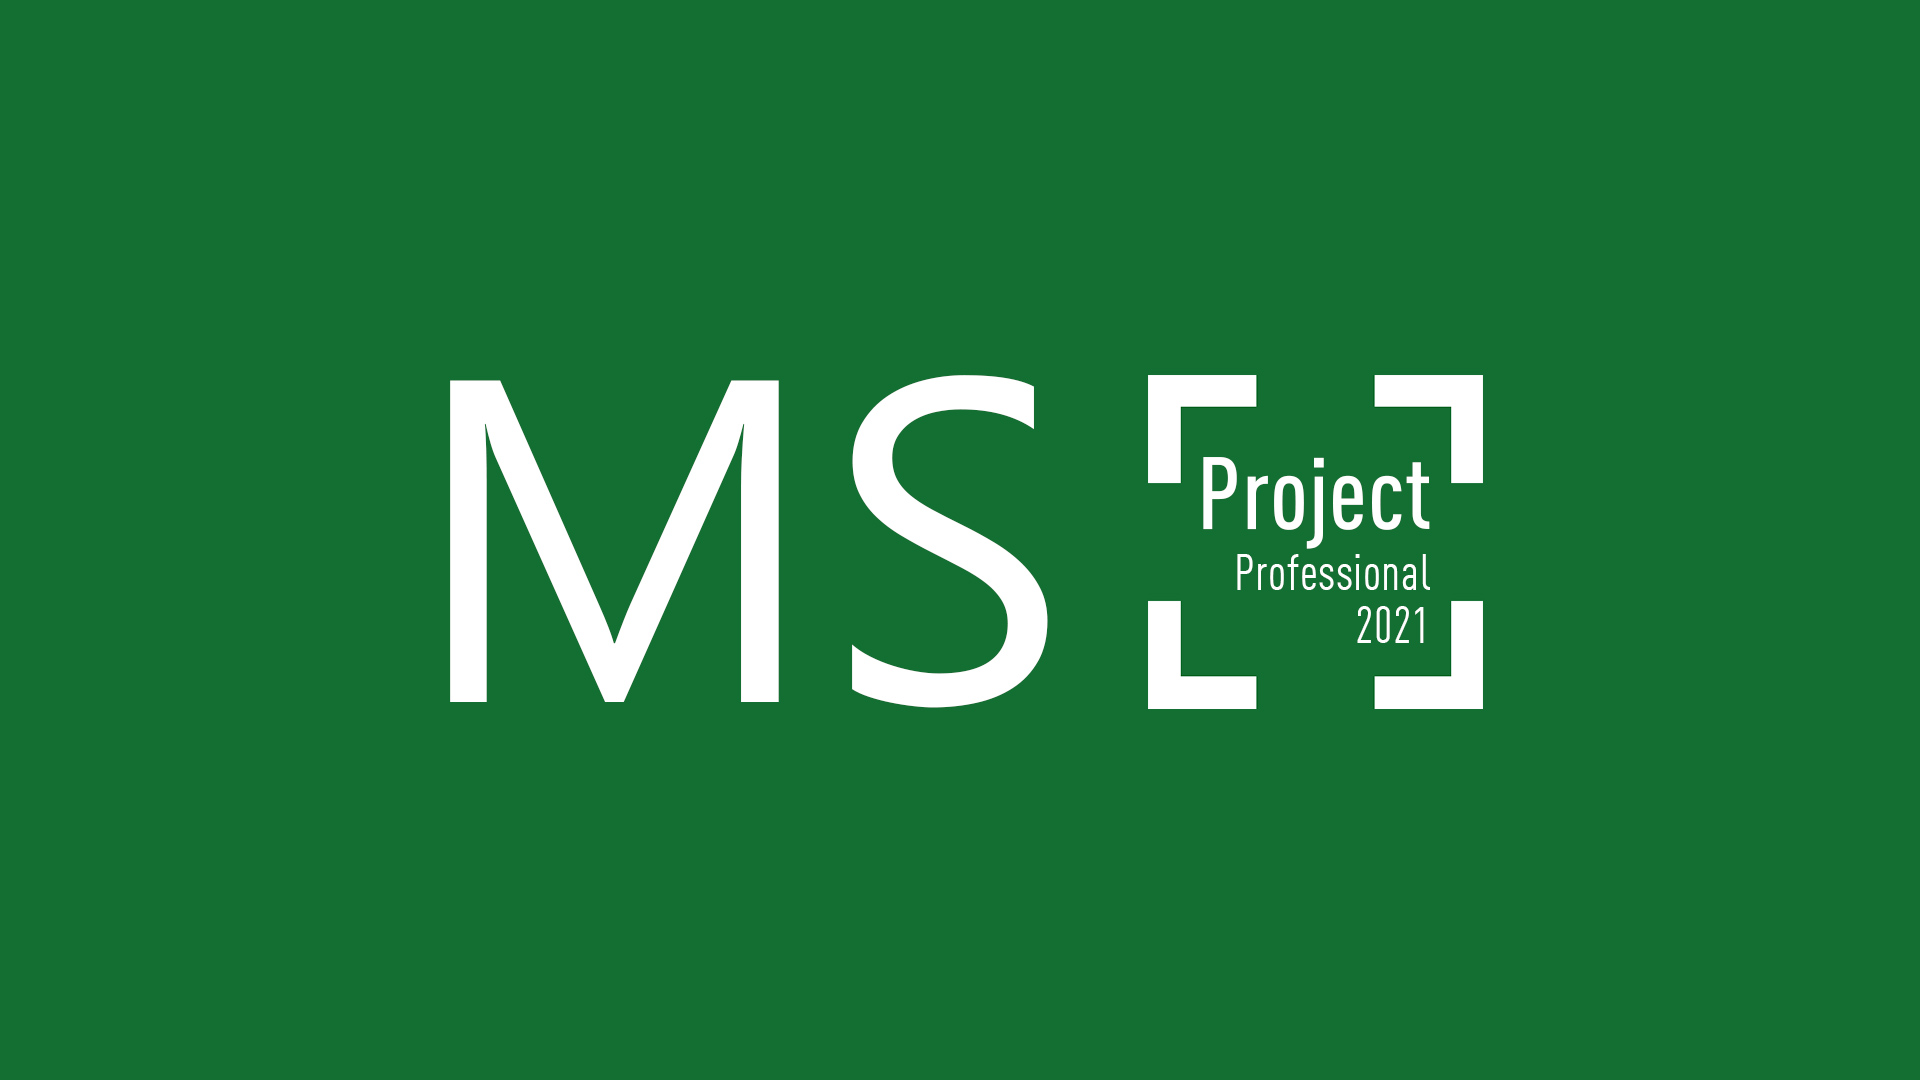 MS Project Professional 2021 CD Key, $13.55